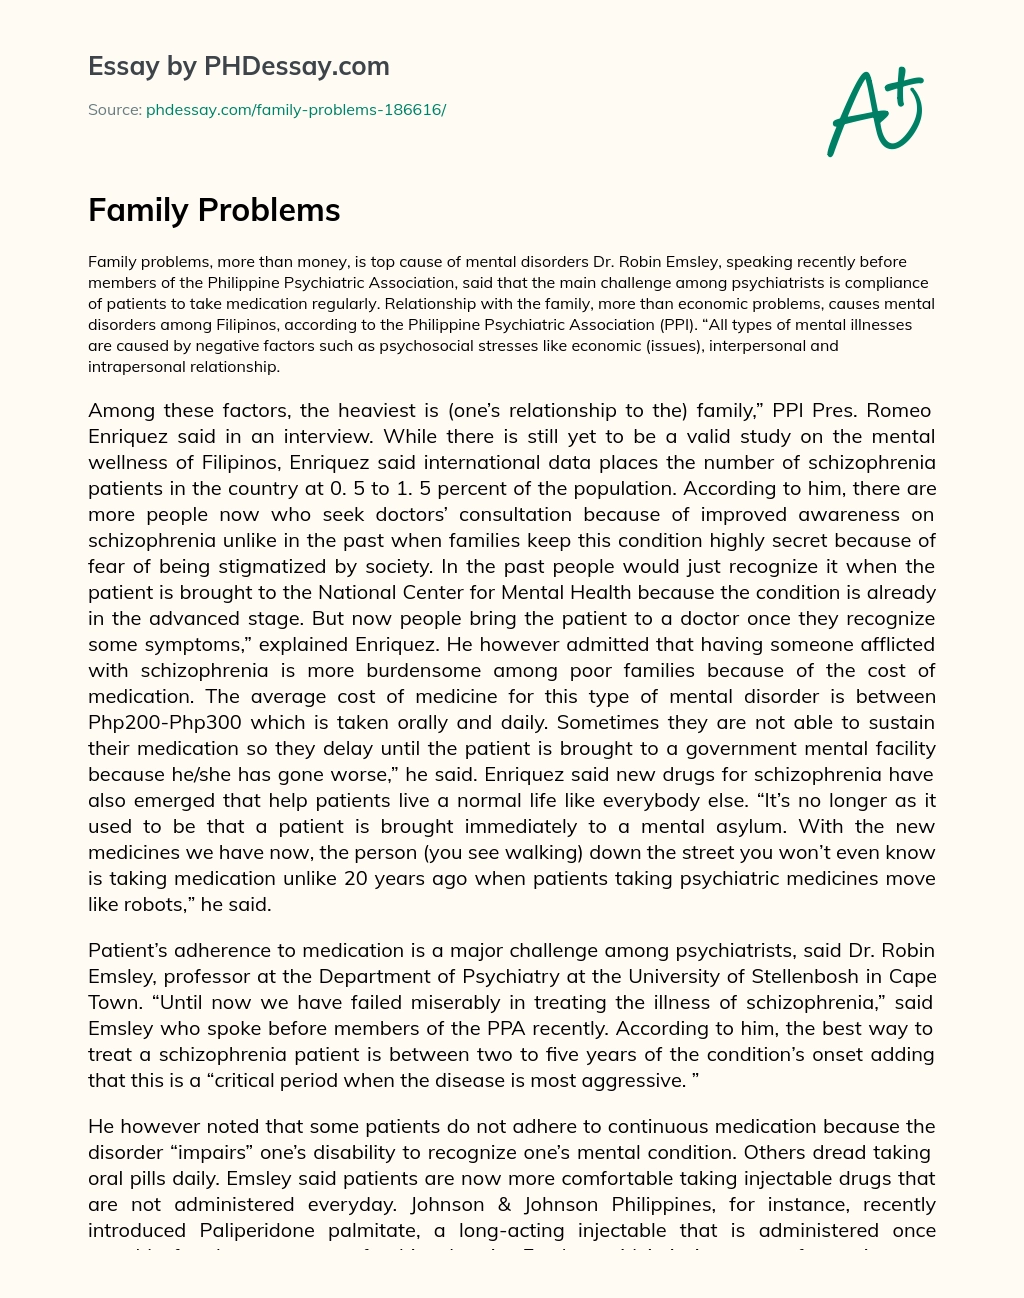 Family Problems essay